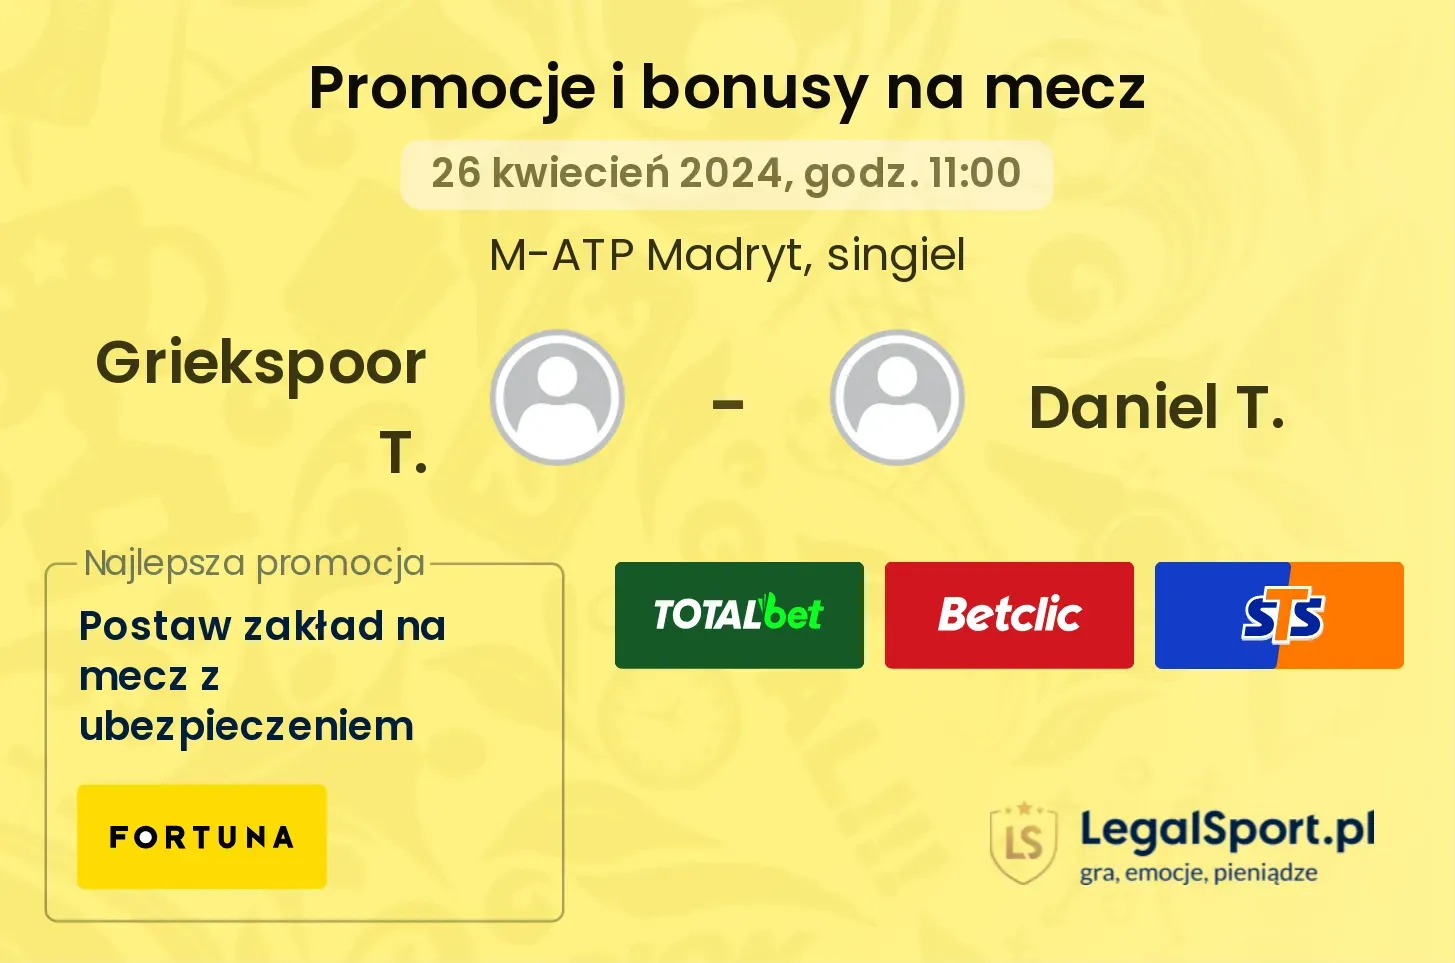 Griekspoor T. - Daniel T. promocje bonusy na mecz